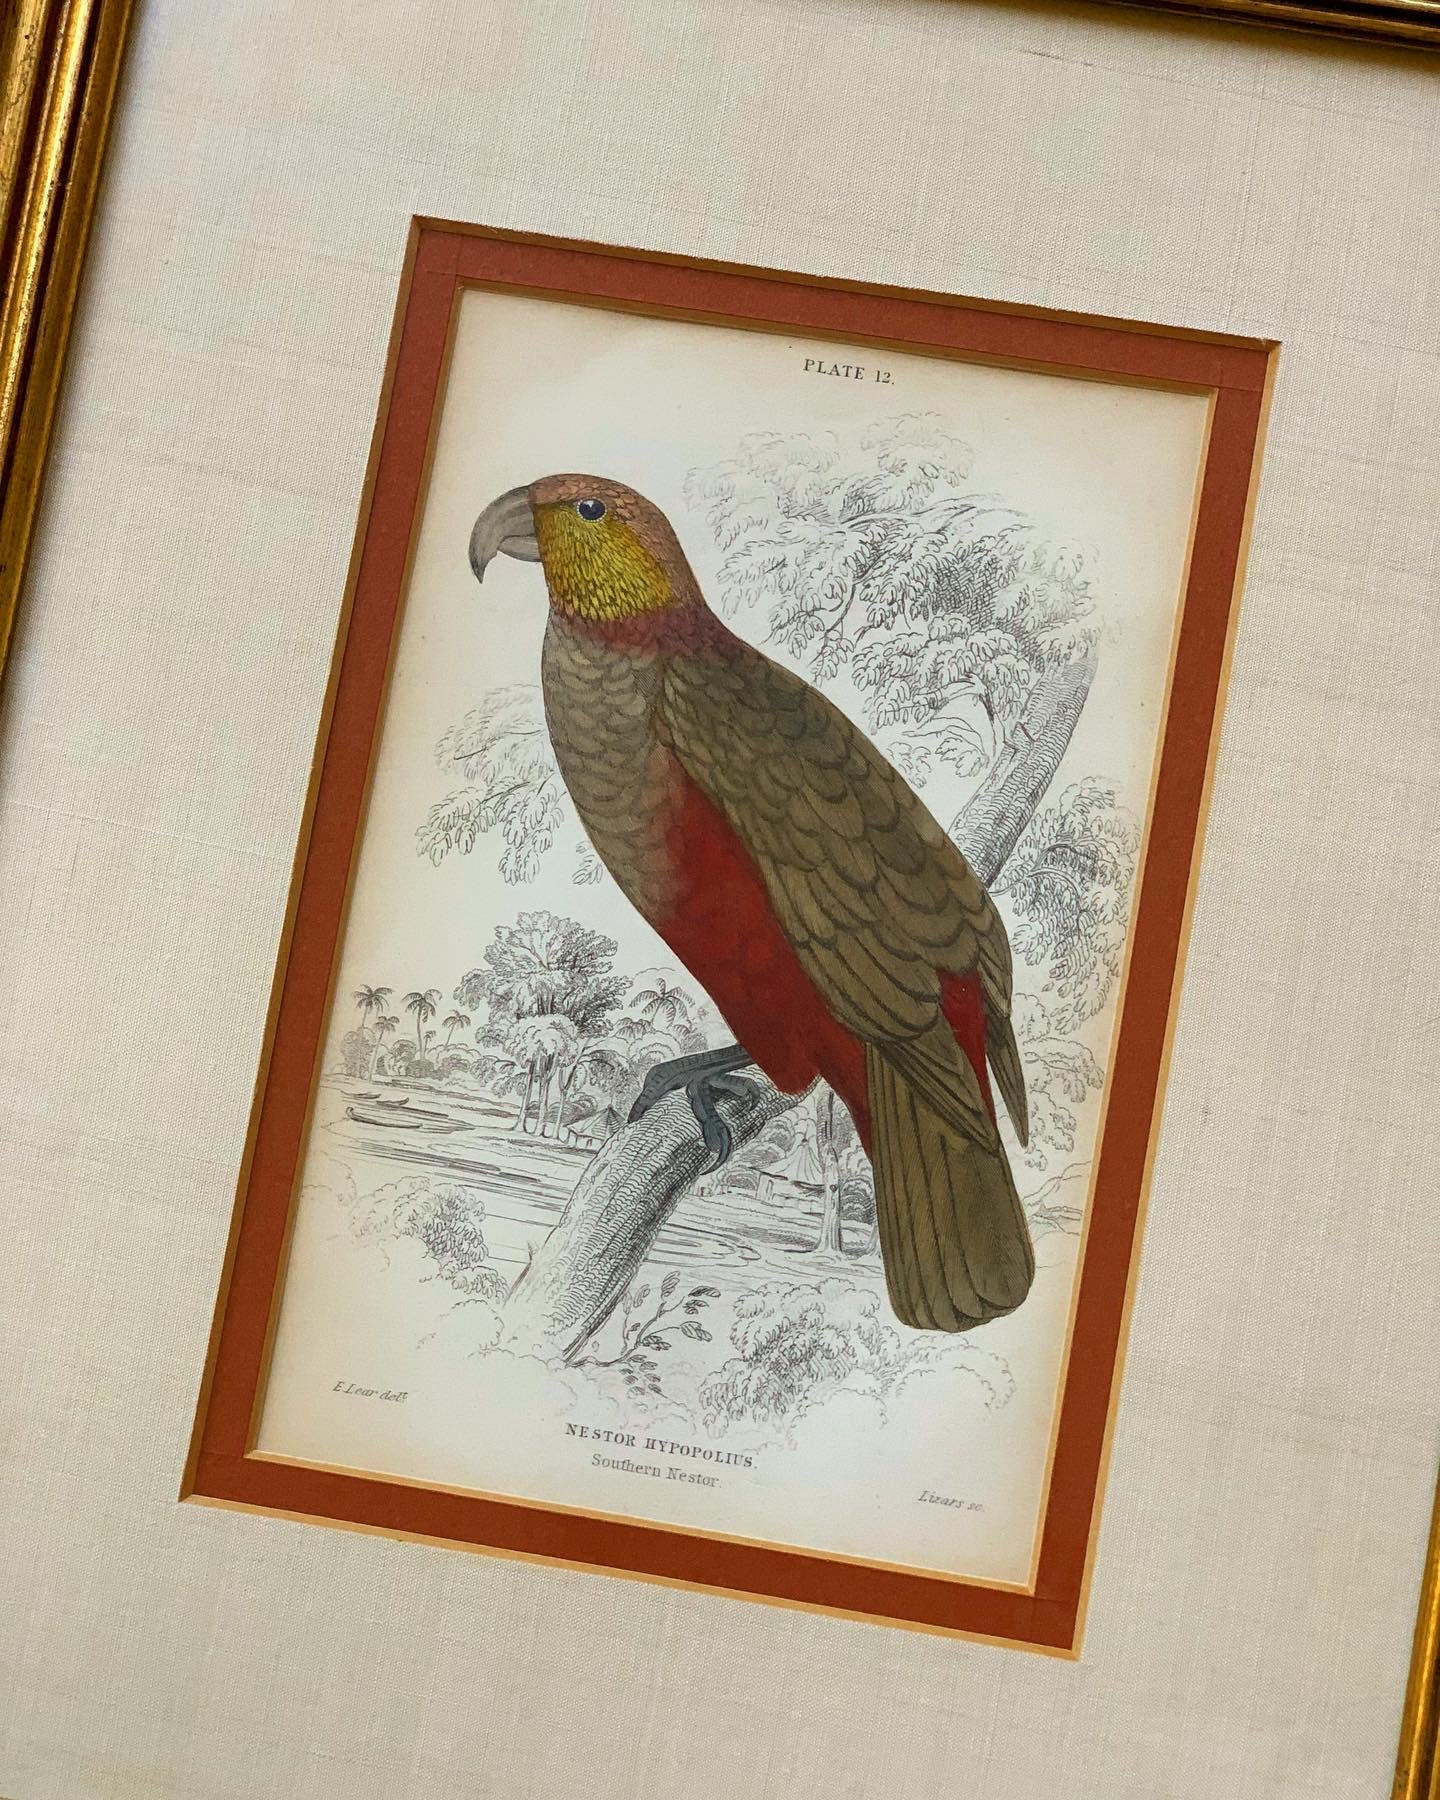 Southern Nestor Parrot, Original Antique Hand-Colored Engraving (1843)